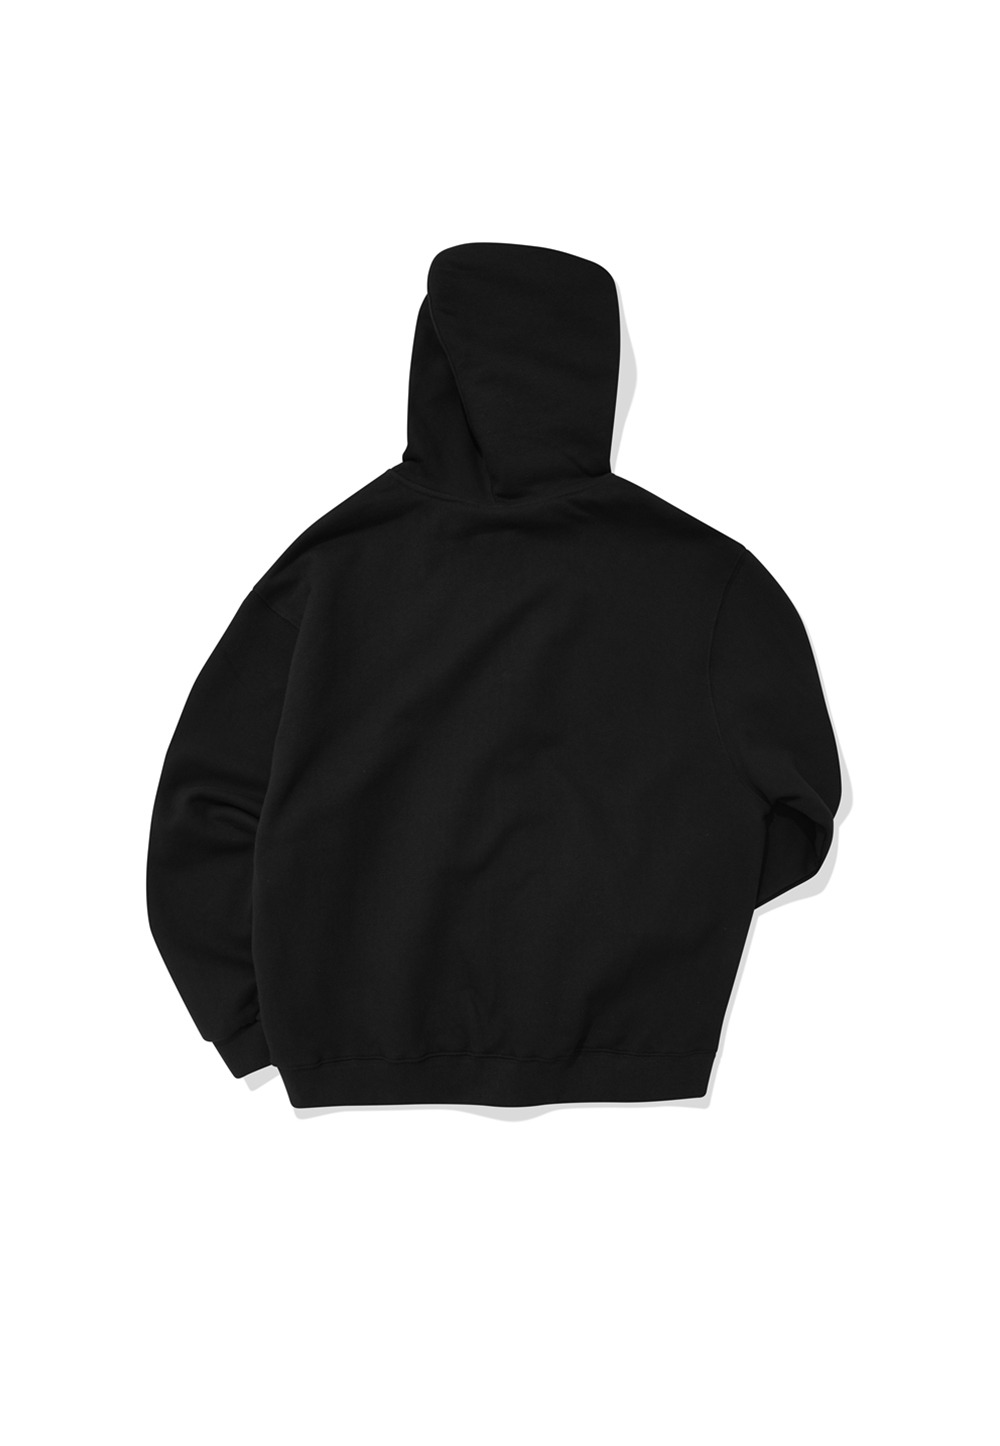 Signature hood zip-up - BLACK